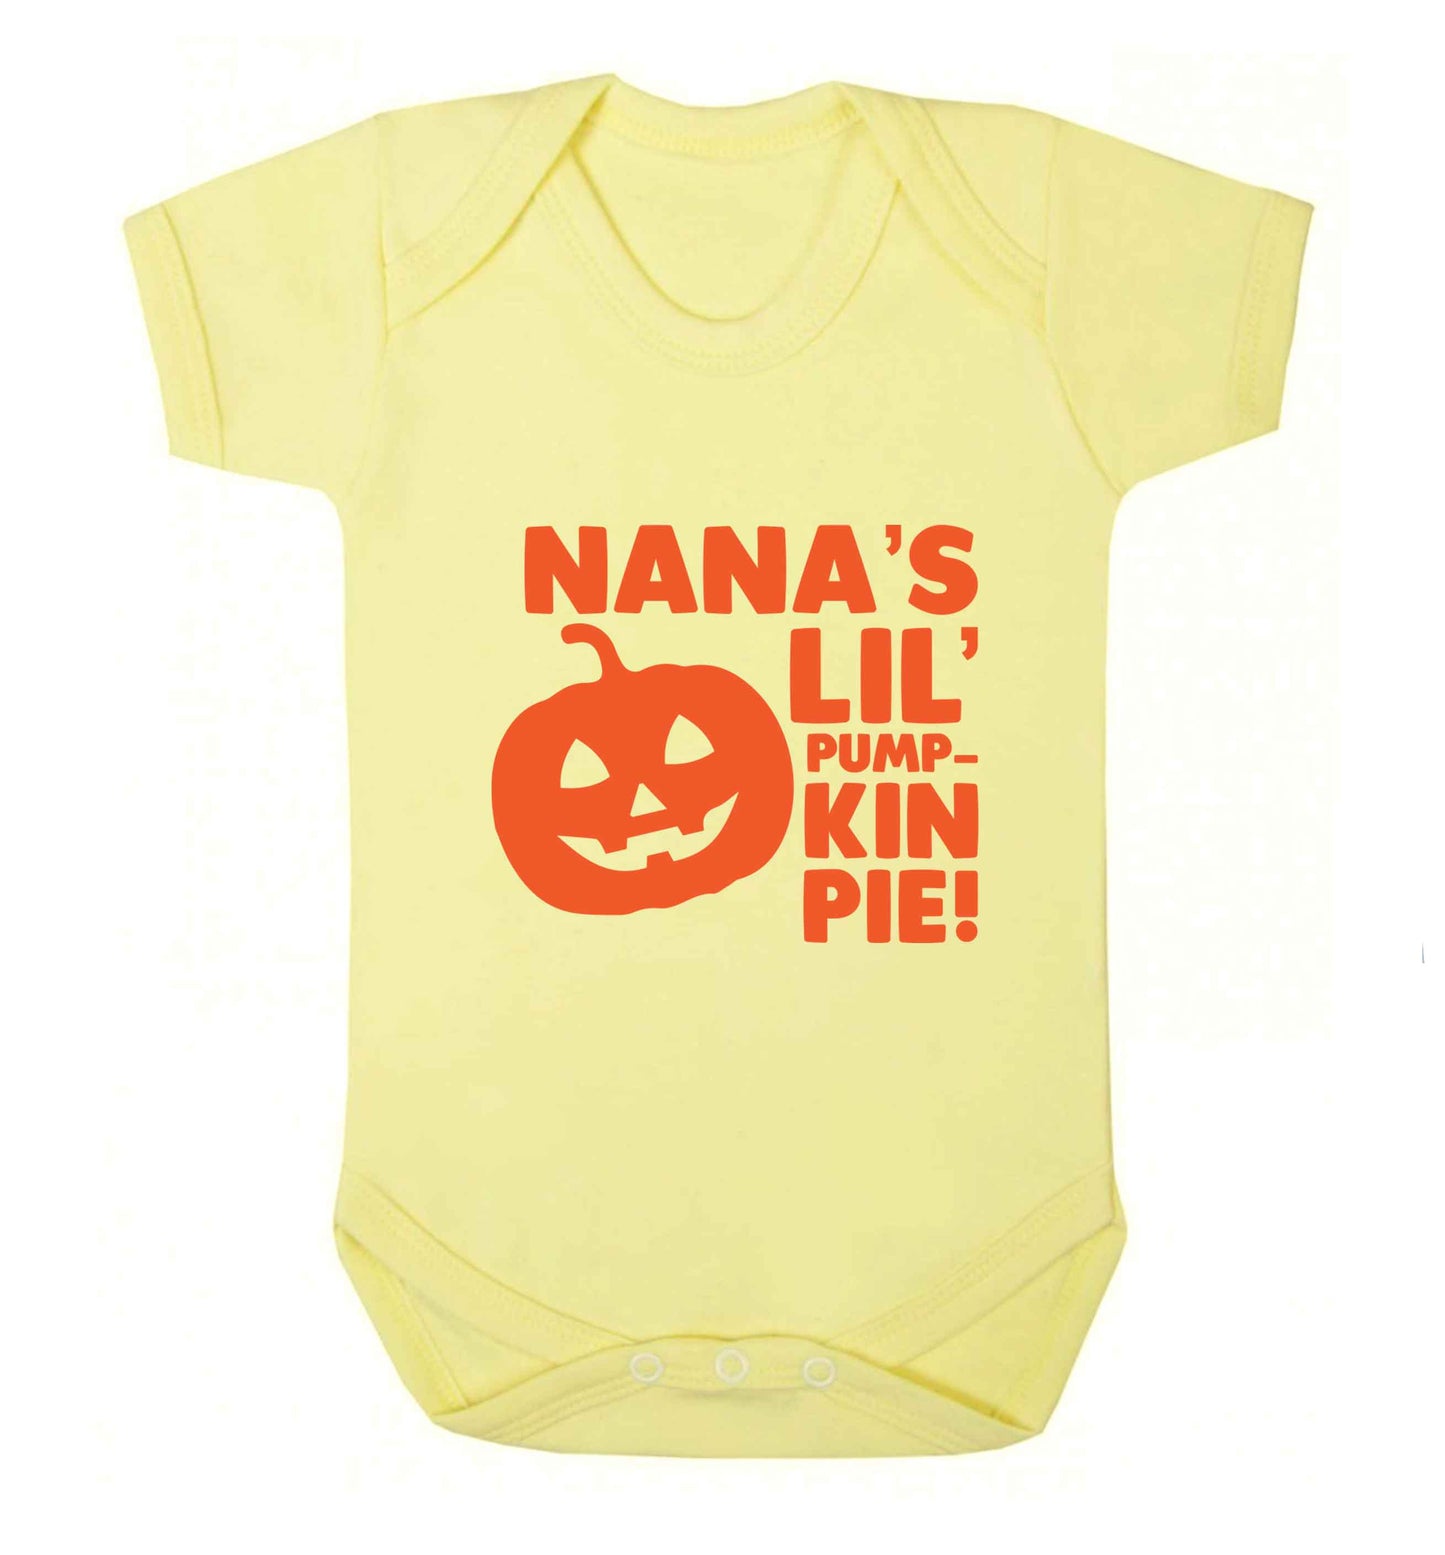 Nana's lil' pumpkin pie baby vest pale yellow 18-24 months